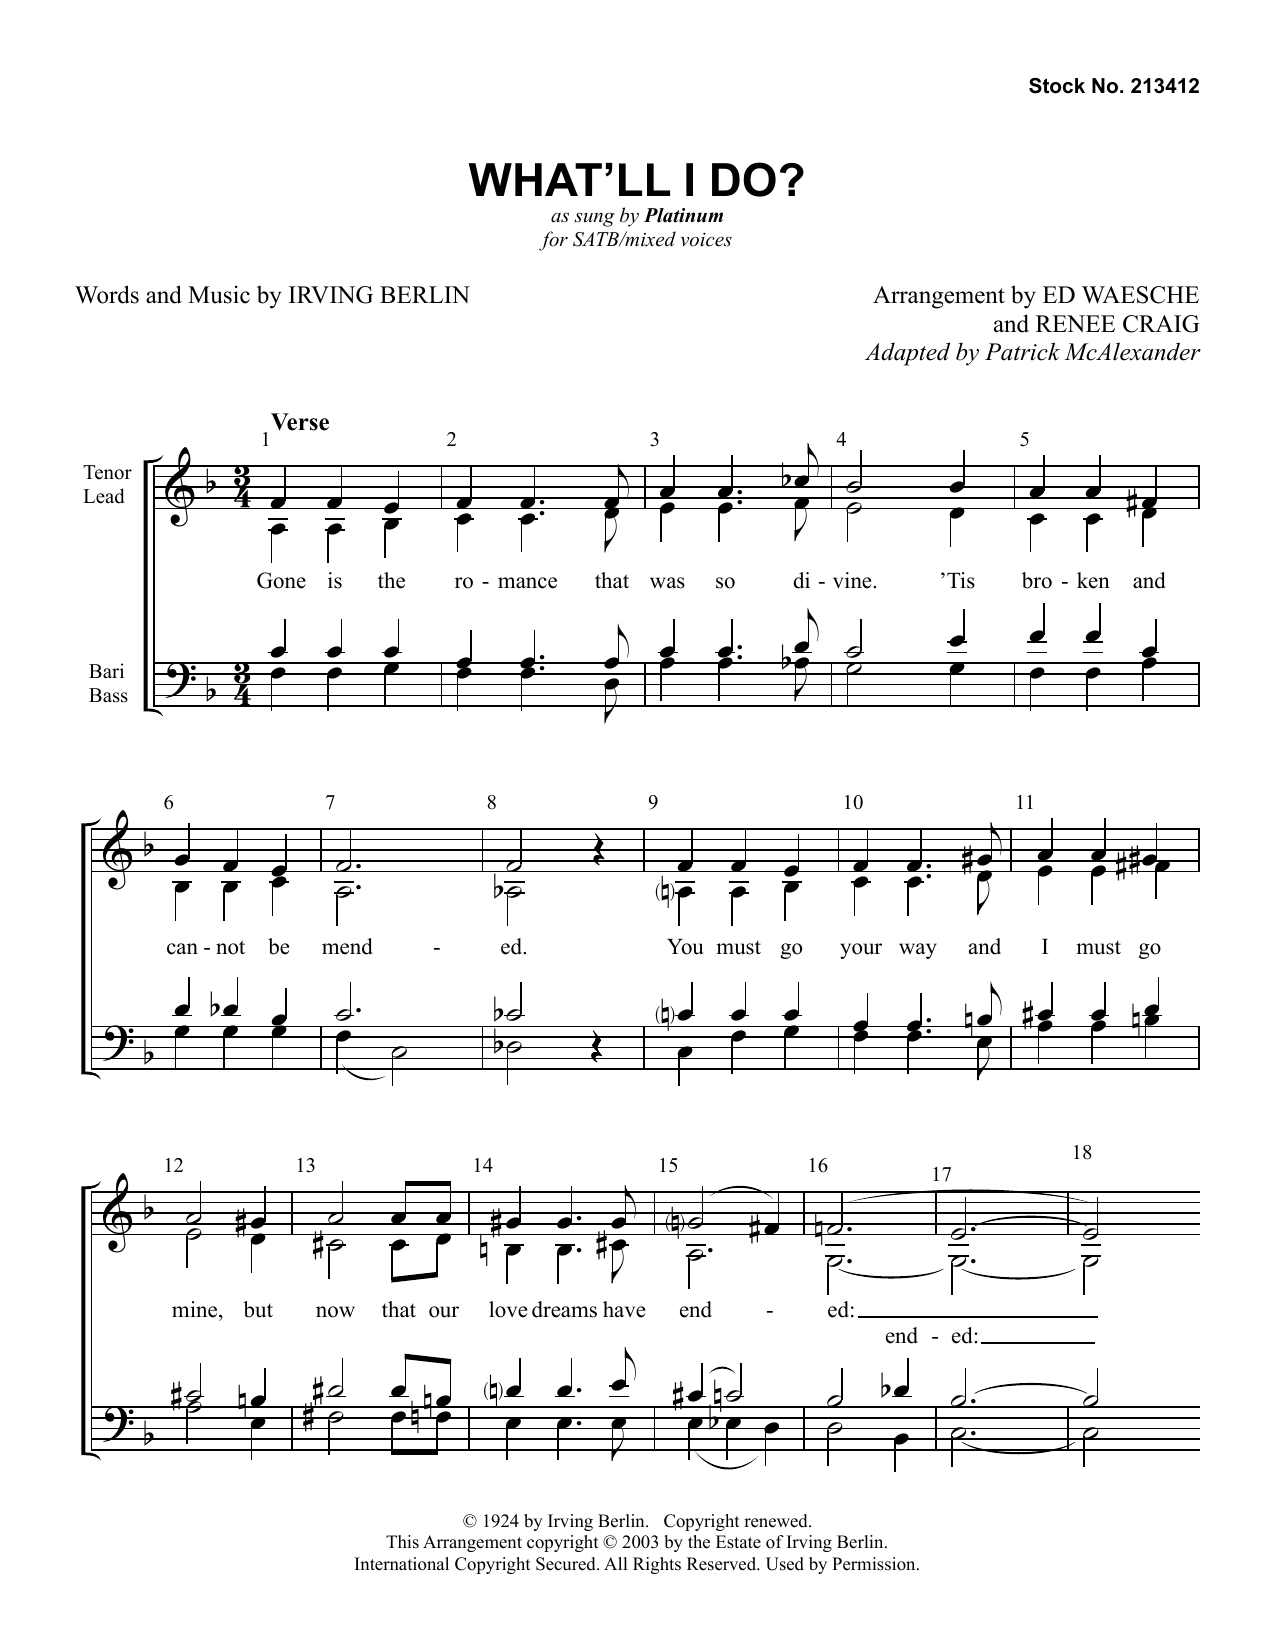 Platinum What'll I Do? (arr. Ed Waesche and Renee Craig) Sheet Music Notes & Chords for SATB Choir - Download or Print PDF